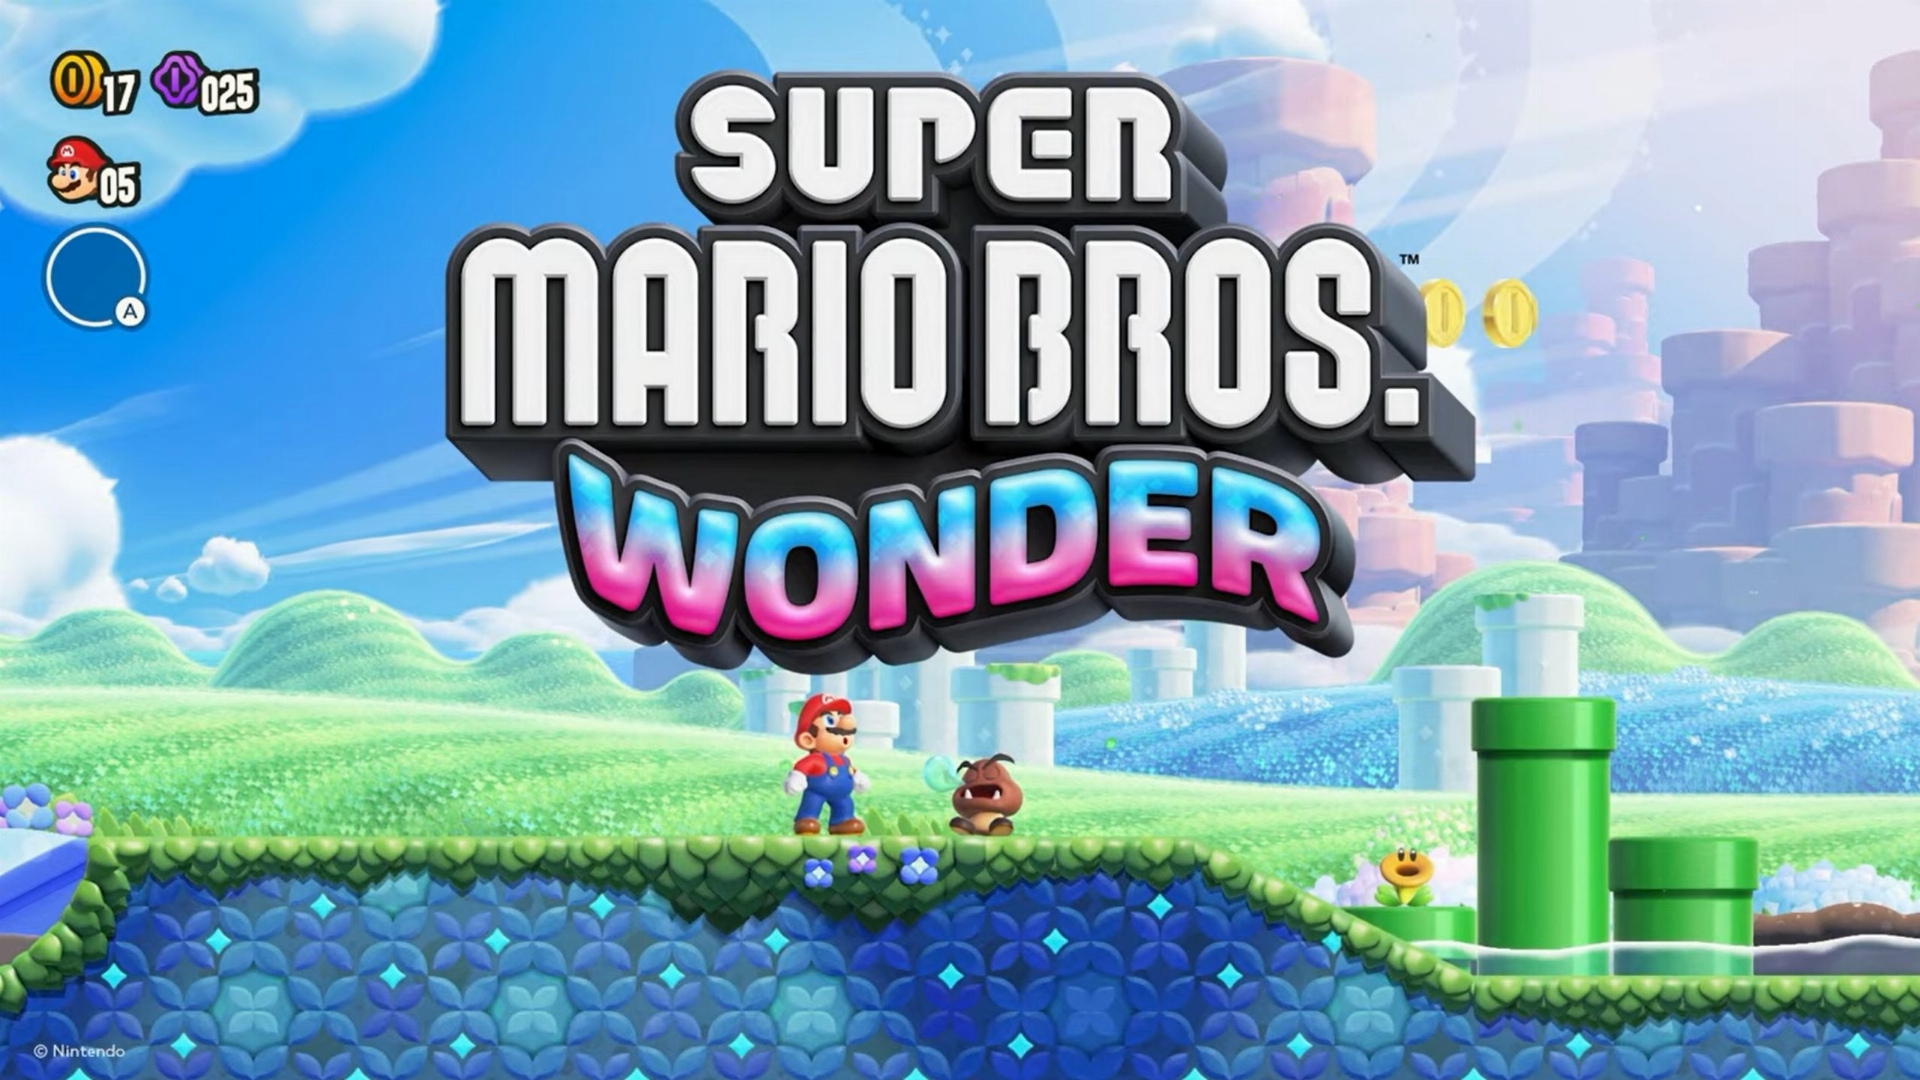 Super Mario Wonder revealed for Switch